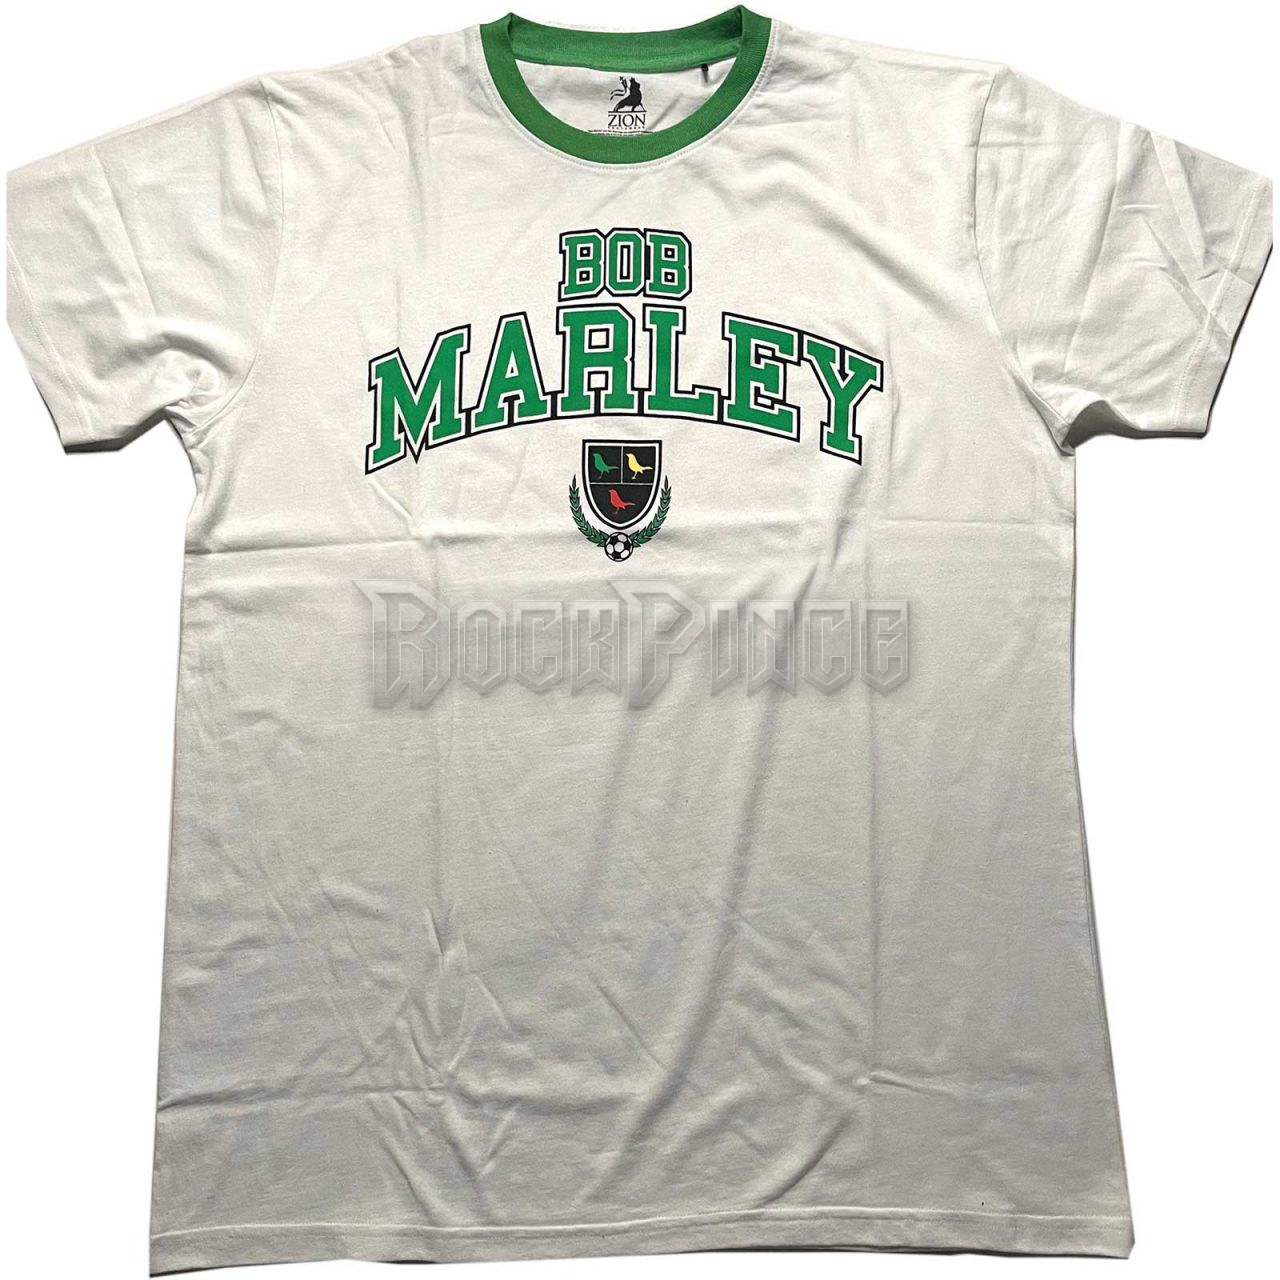 Bob Marley - Collegiate Crest - unisex póló - BMATS50MW